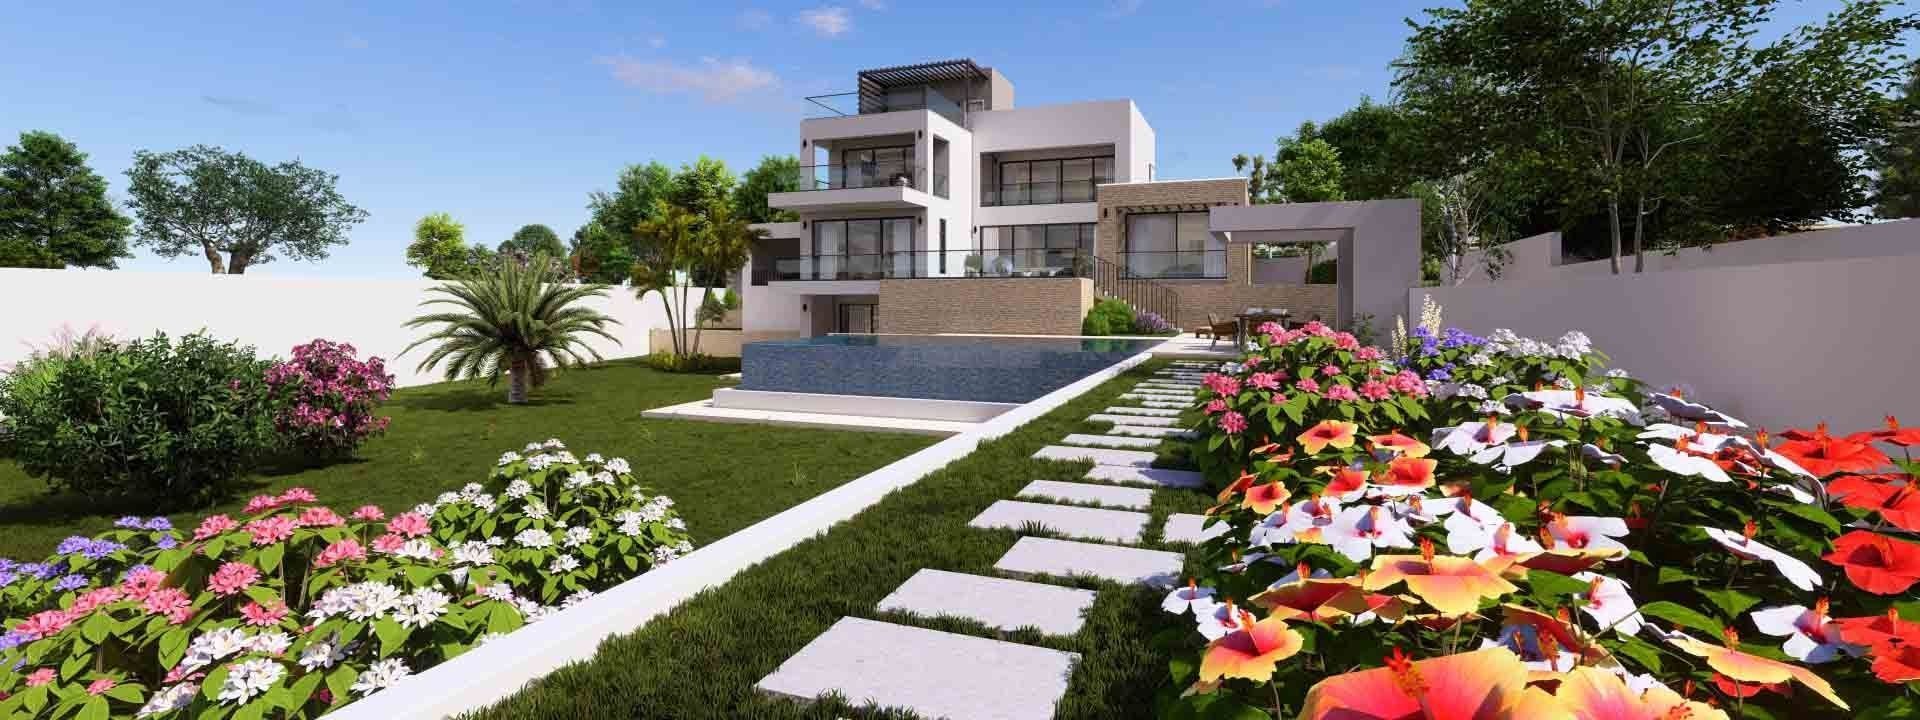 5 Bedroom Villa for Sale in Secret Valley, Paphos District